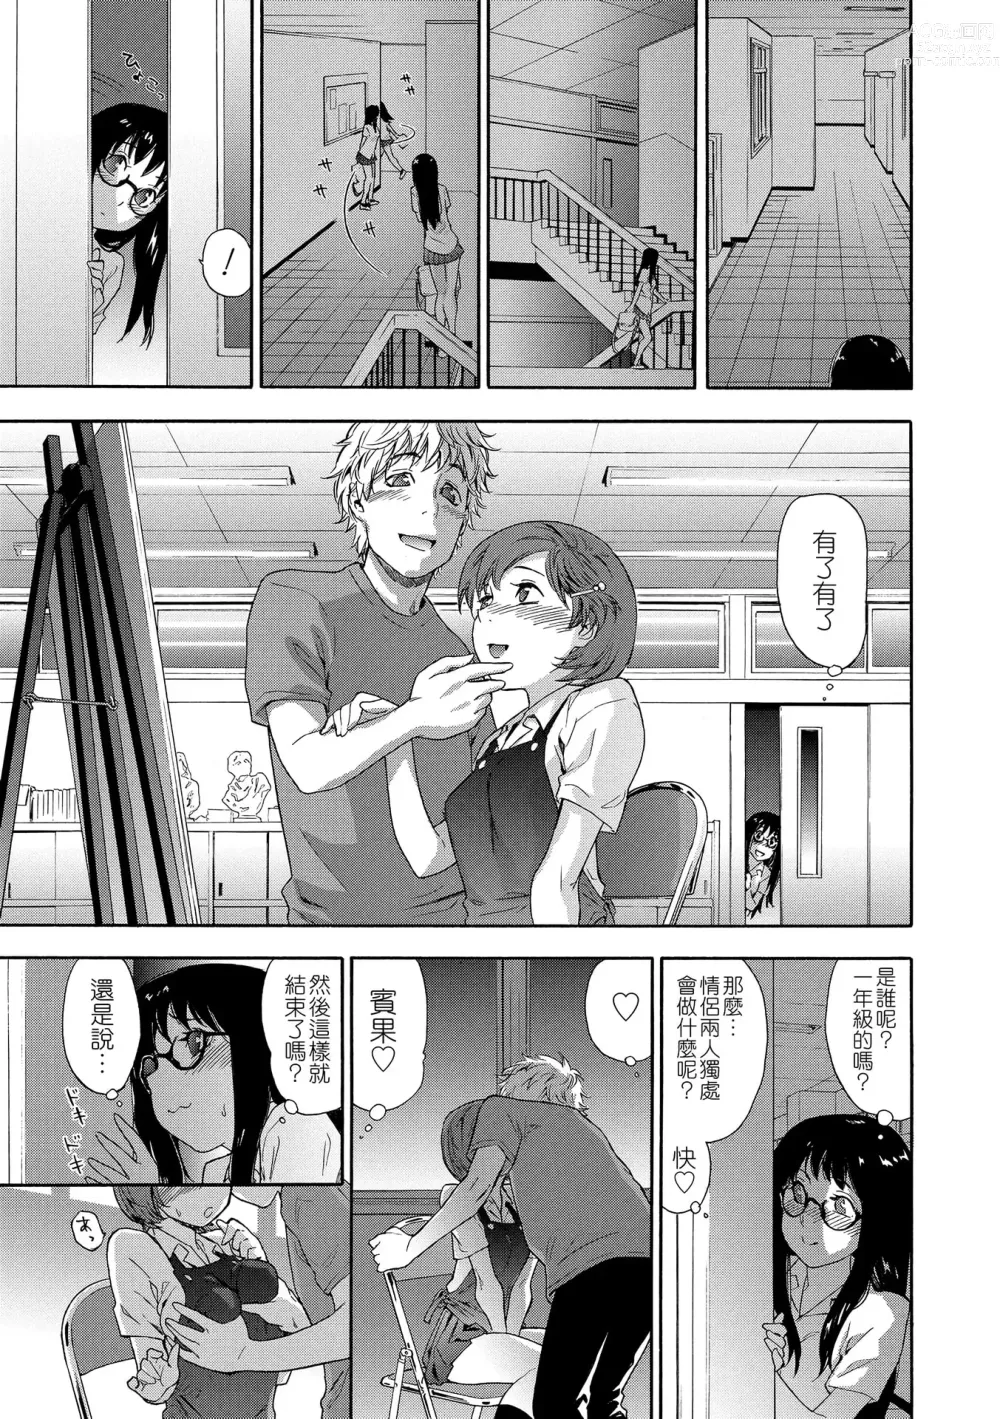 Page 9 of manga 甜美香濃的香草精華 (uncensored)